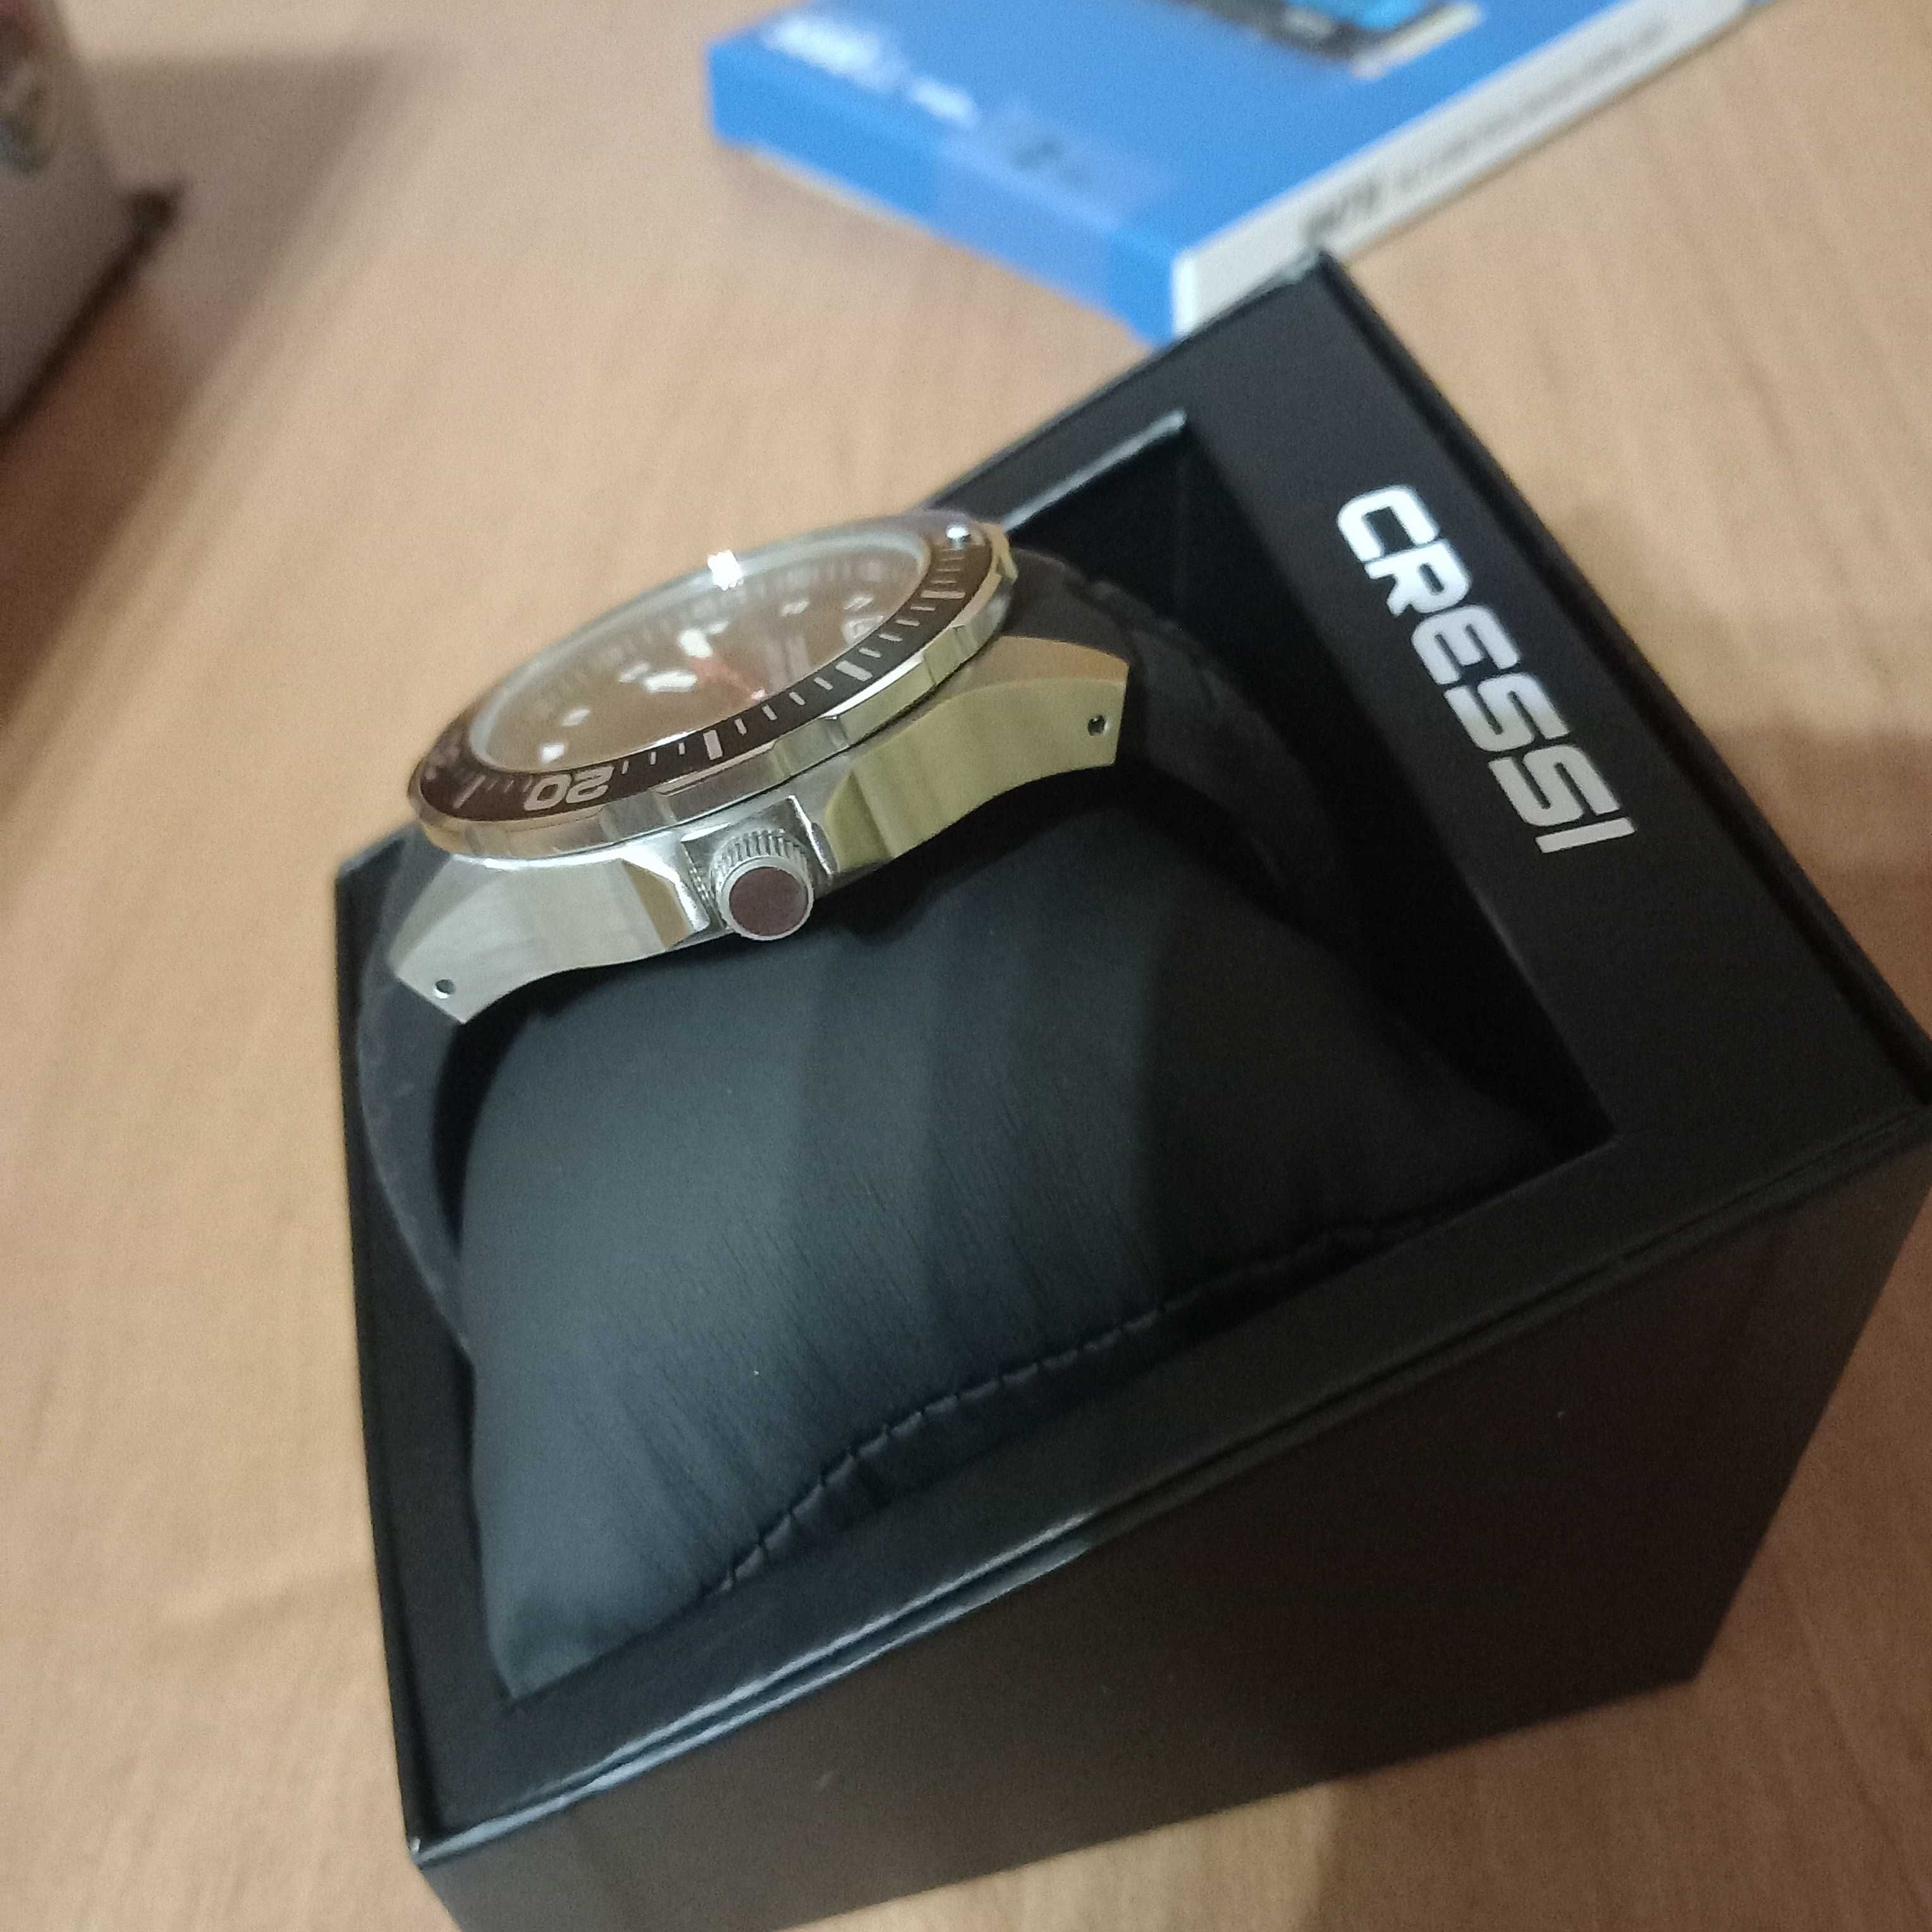 Cressi Manta Professional dive watch годинник